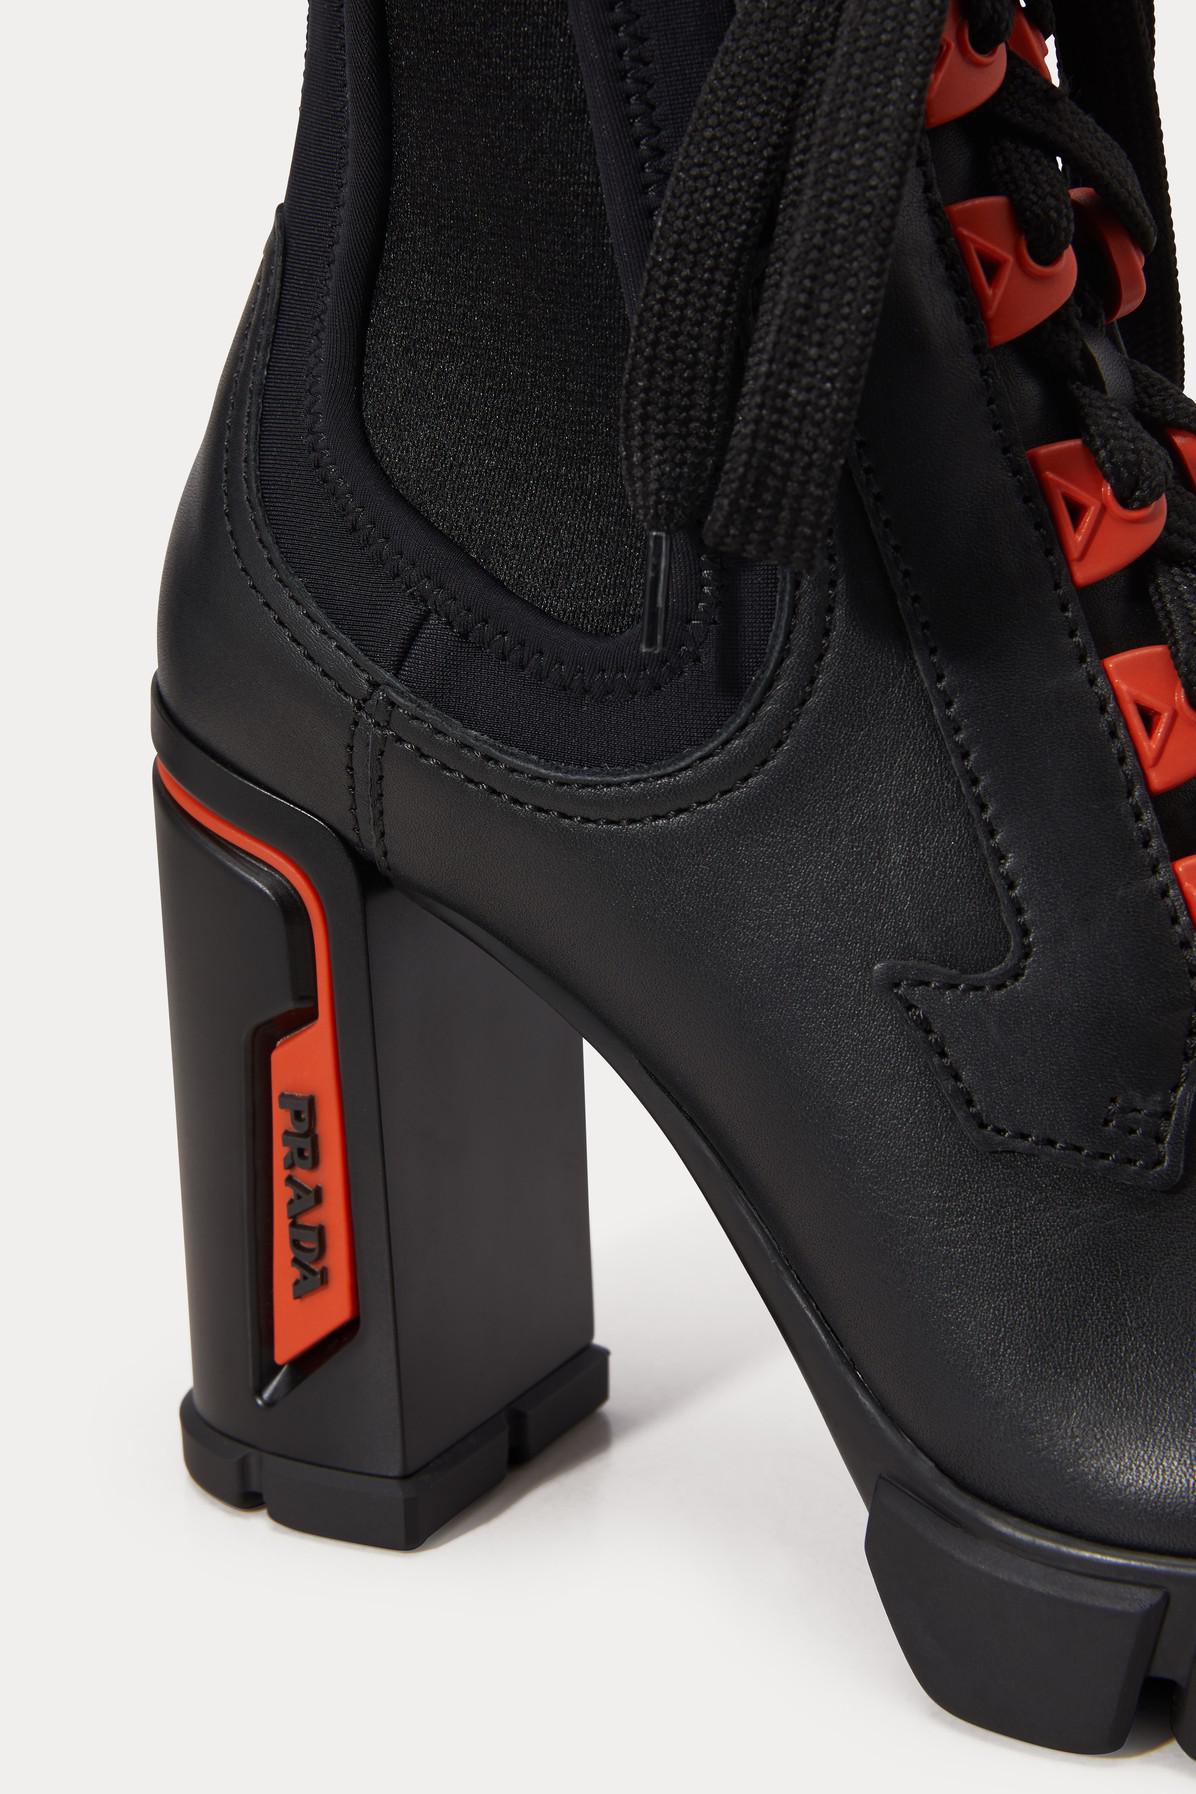 black and orange prada boots